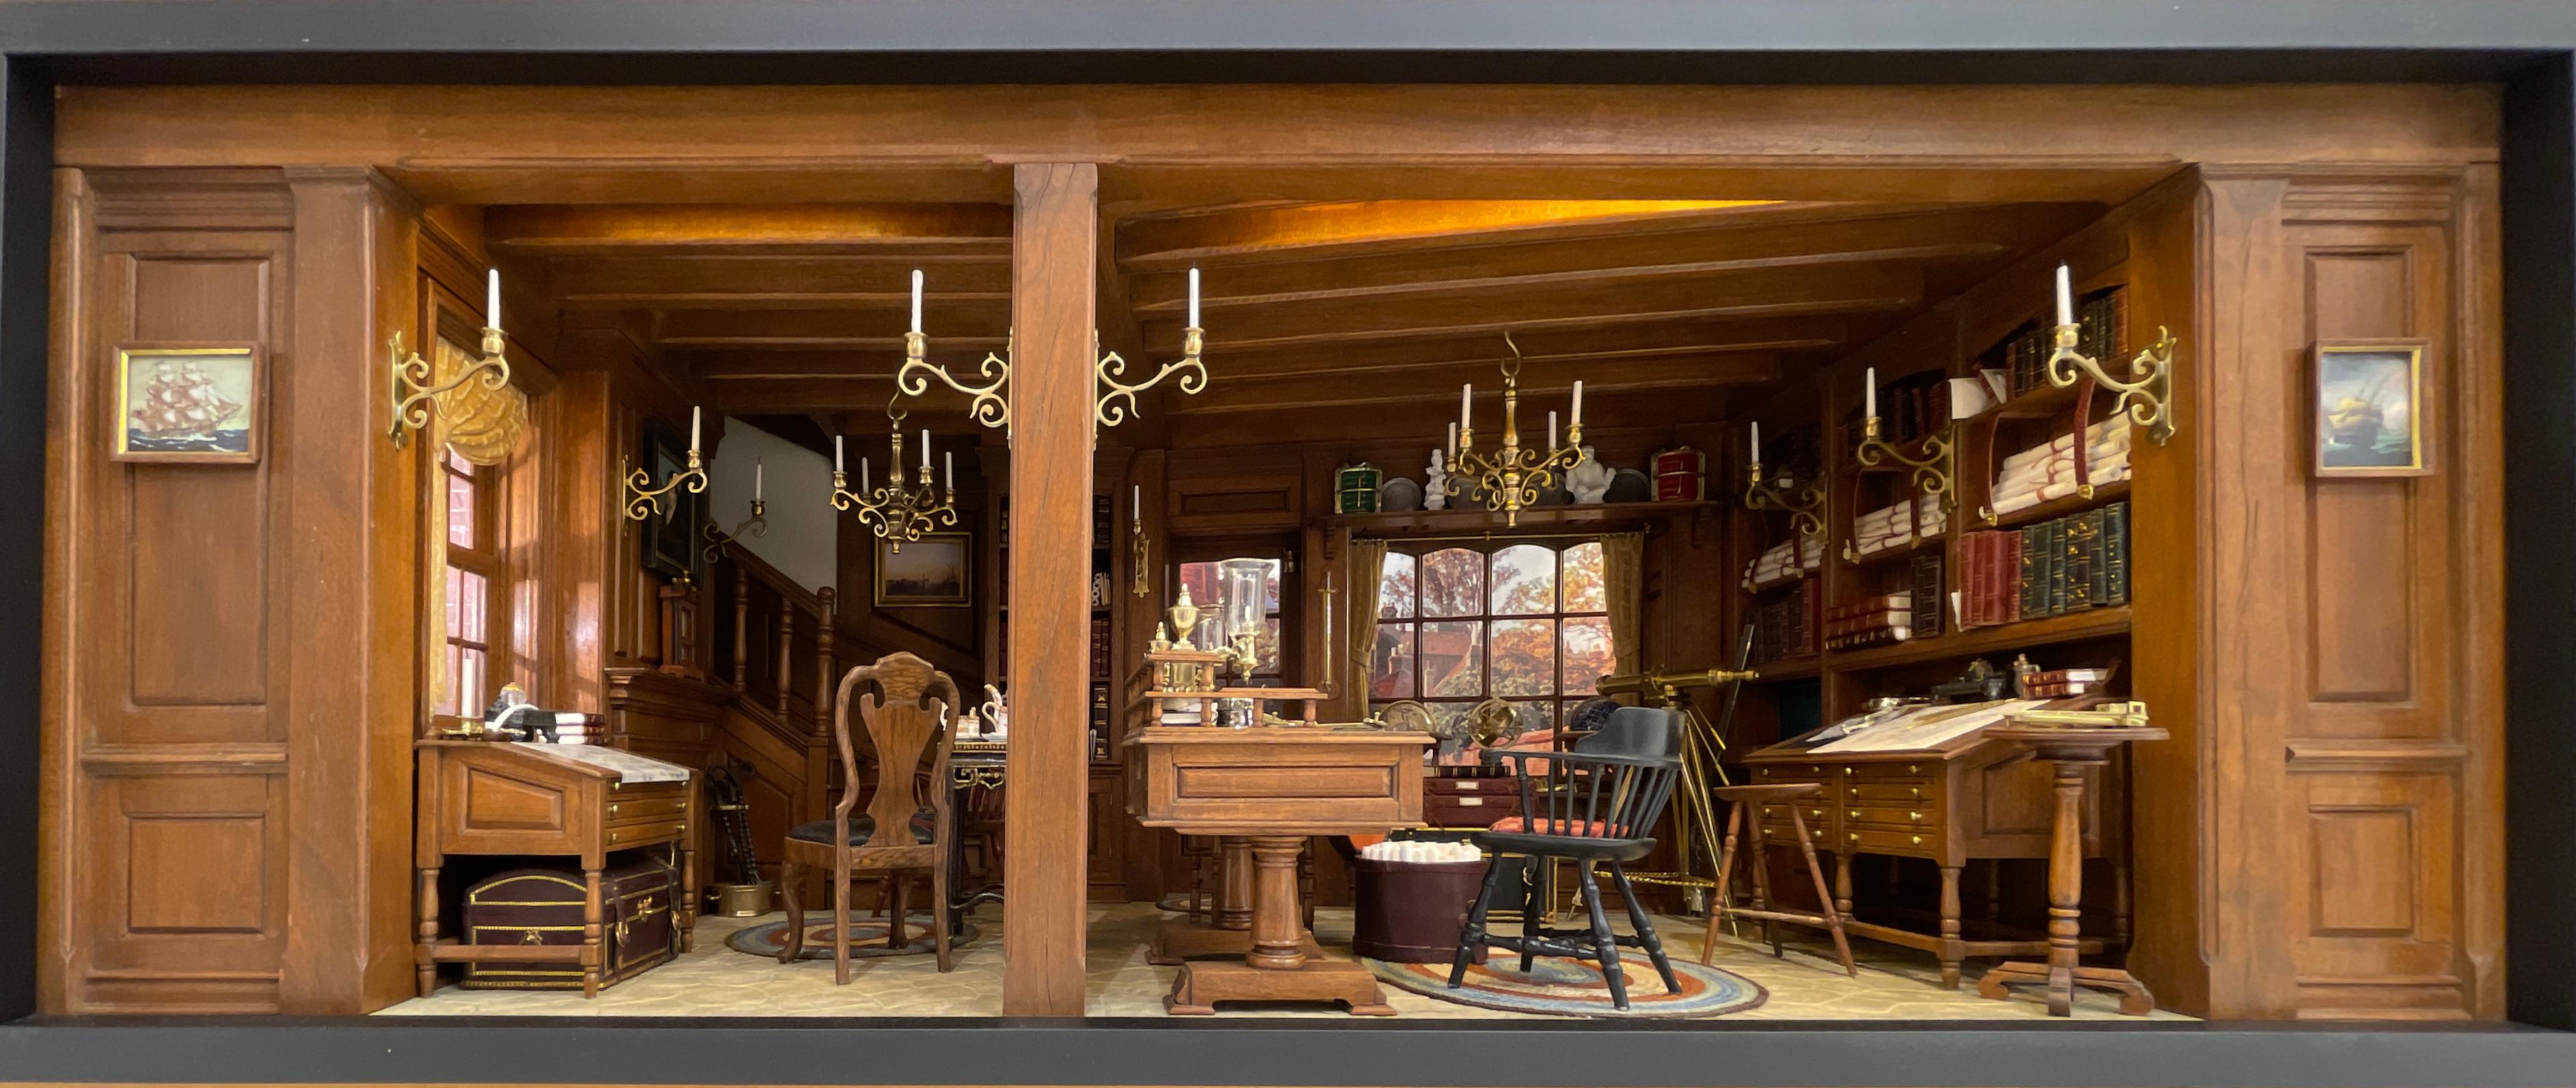 Henry "Hank" Kupjack Still-Life Sculpture - 18th Century New England Cartographer's Office - Kupjack Studios Miniature Room